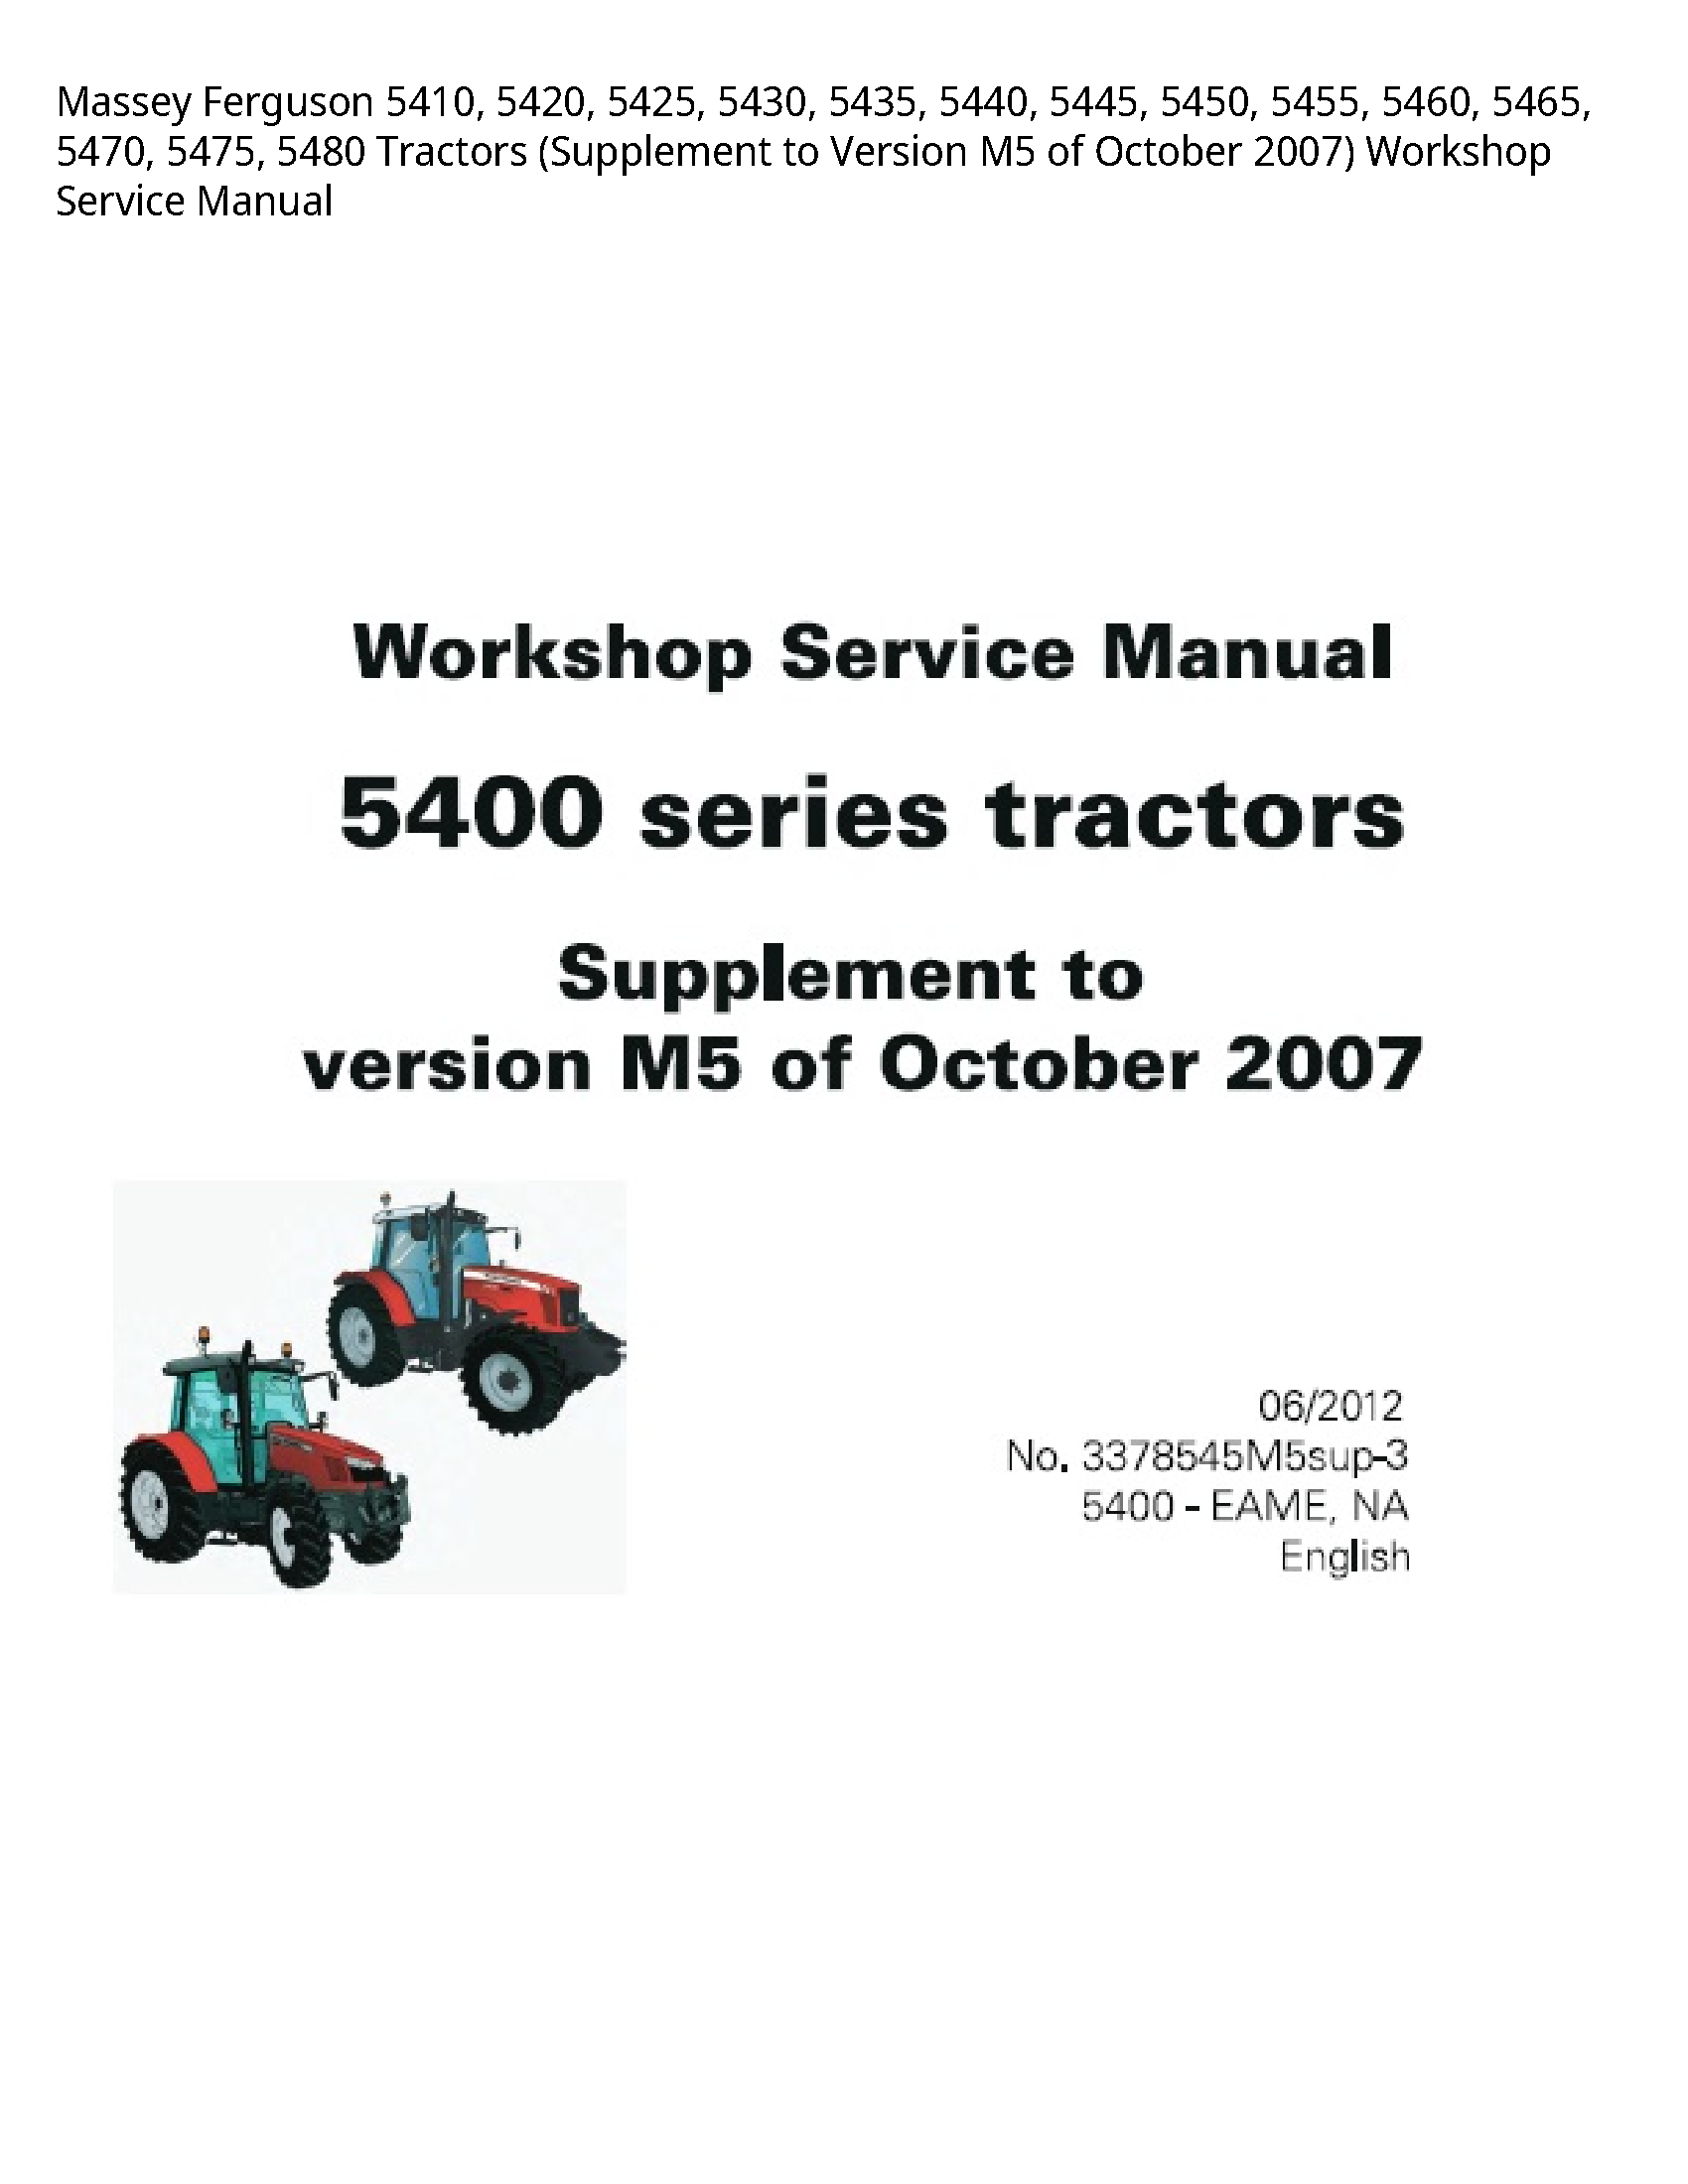 Massey Ferguson 5410 Tractors (Supplement to Version of October Service manual